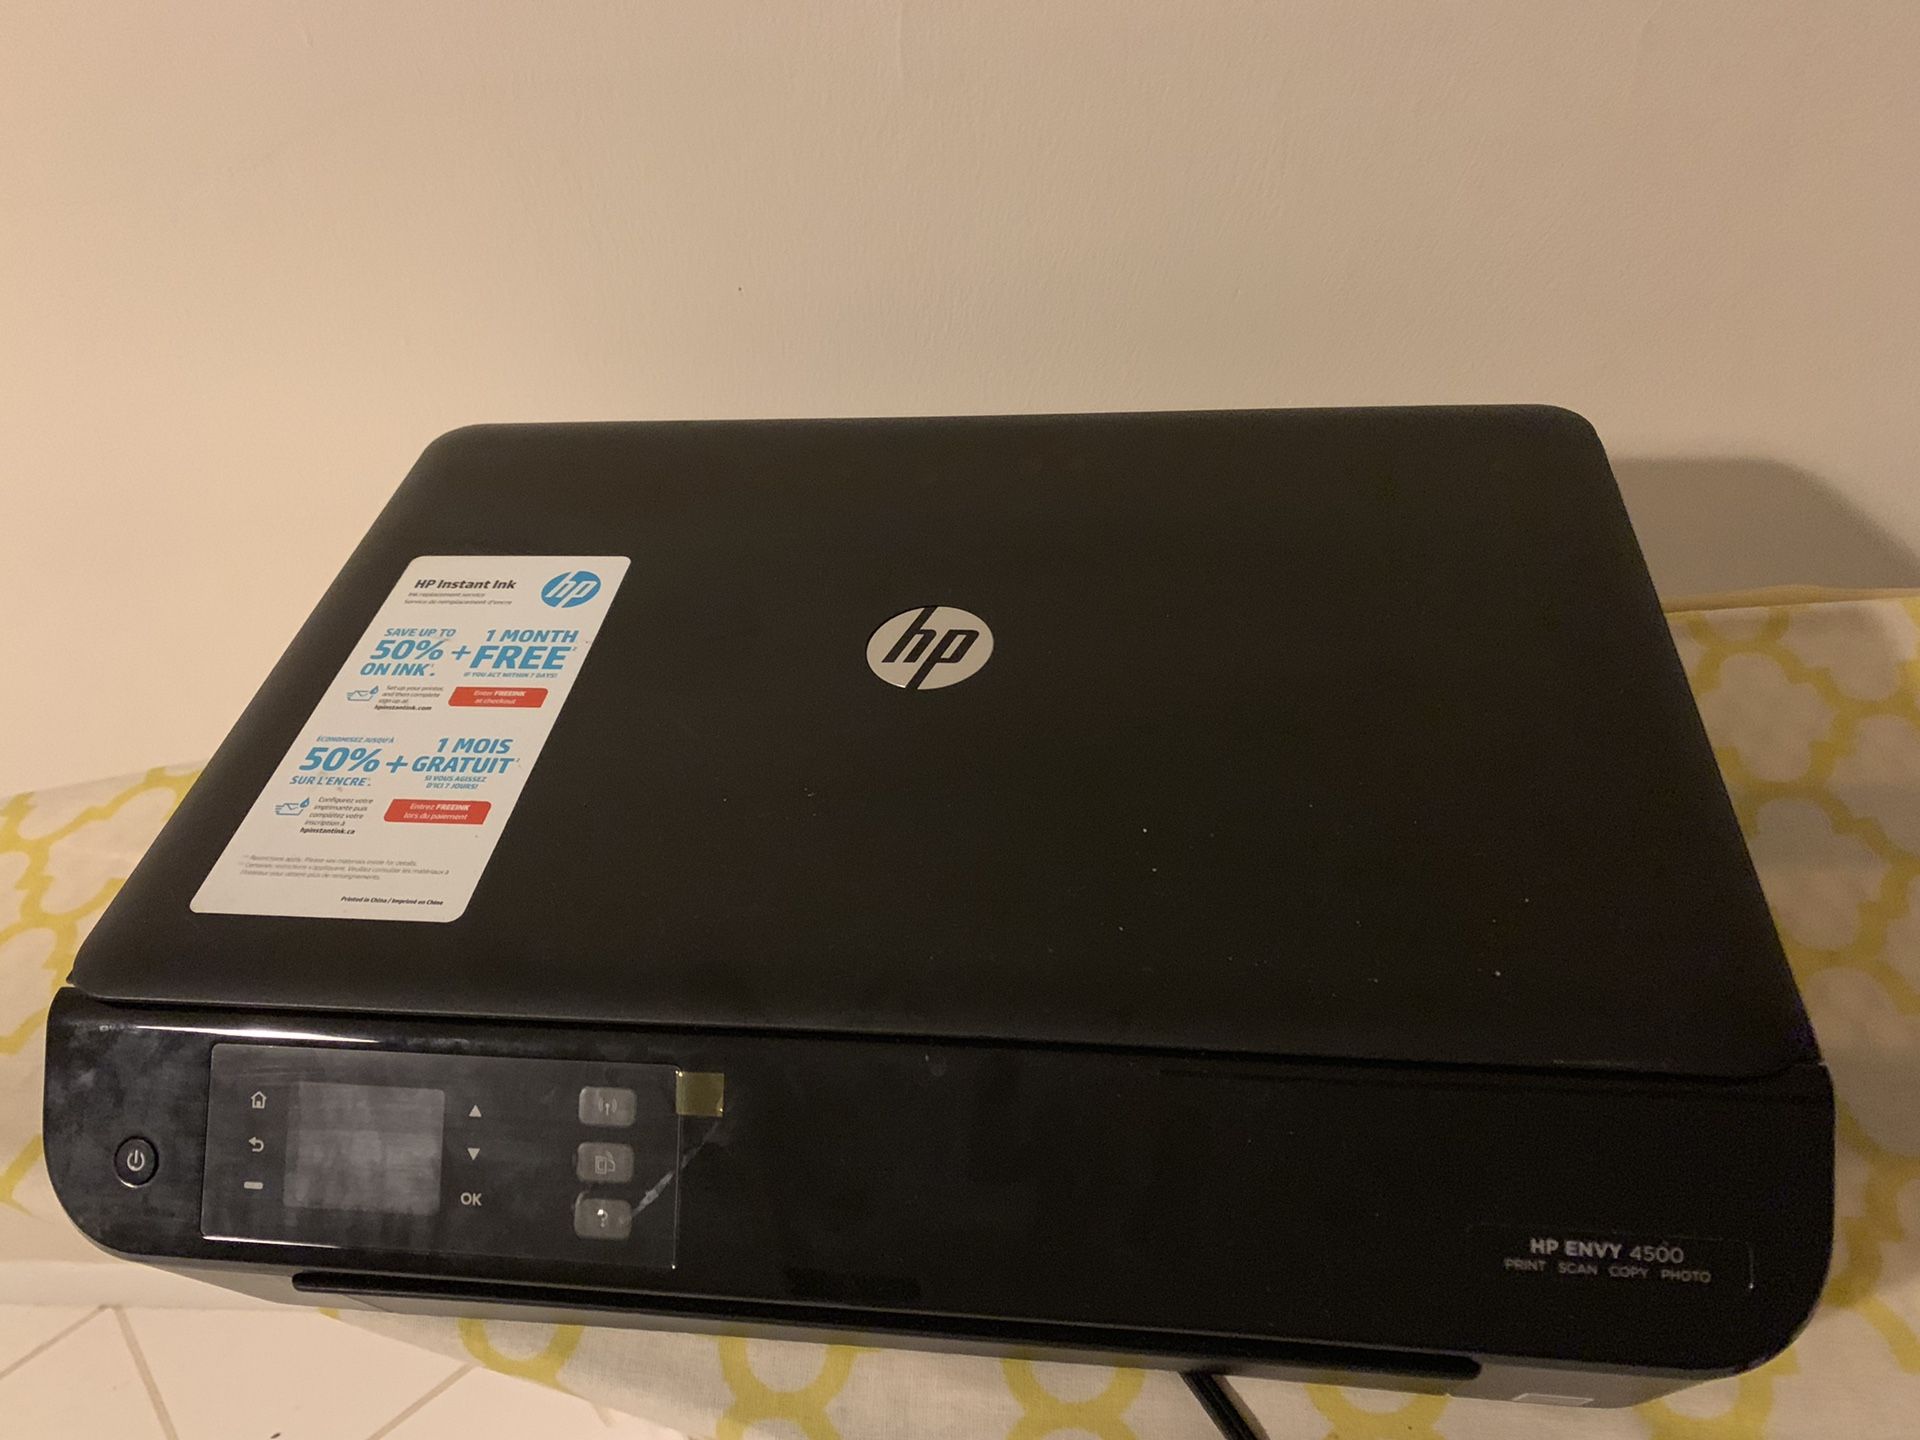 HP ENVY 4500 printer, scan, copy, and photo